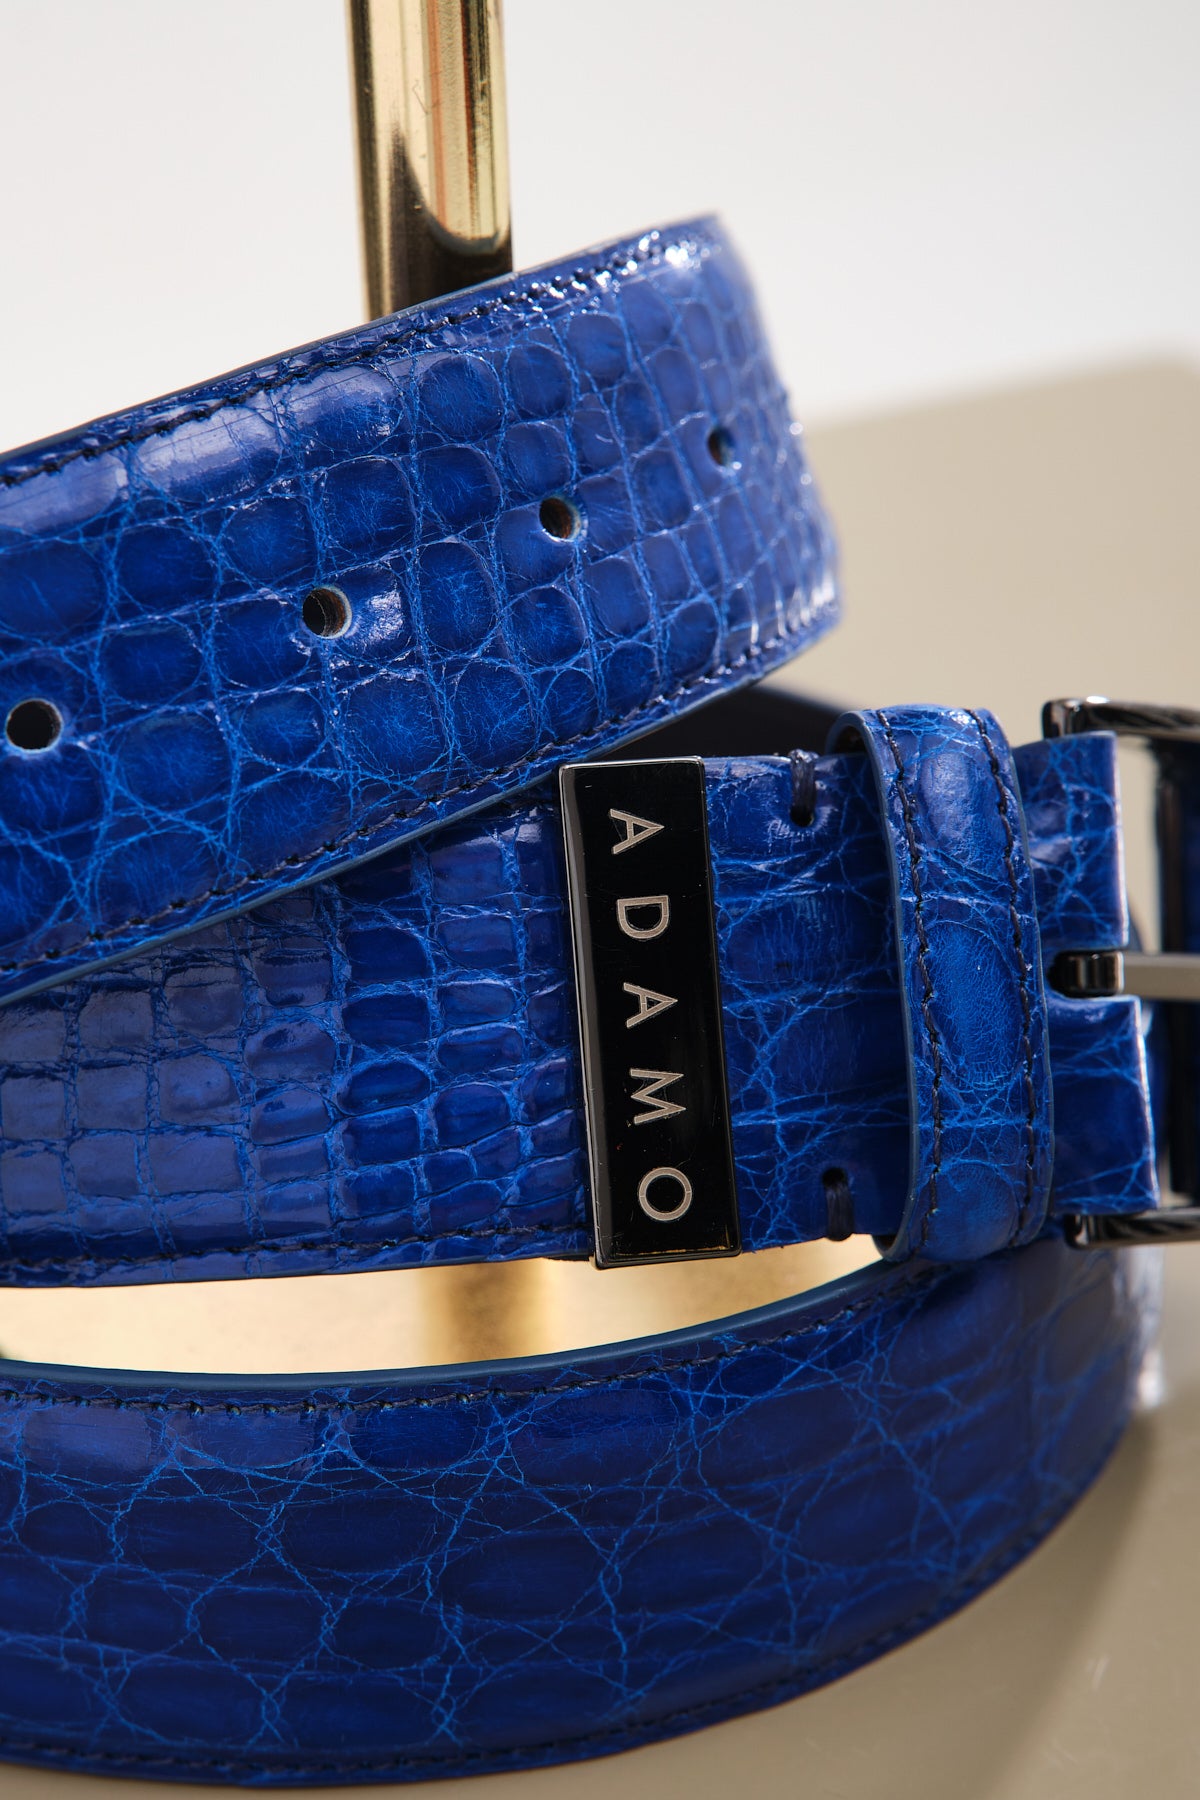 Blue Crocodile Leather belt